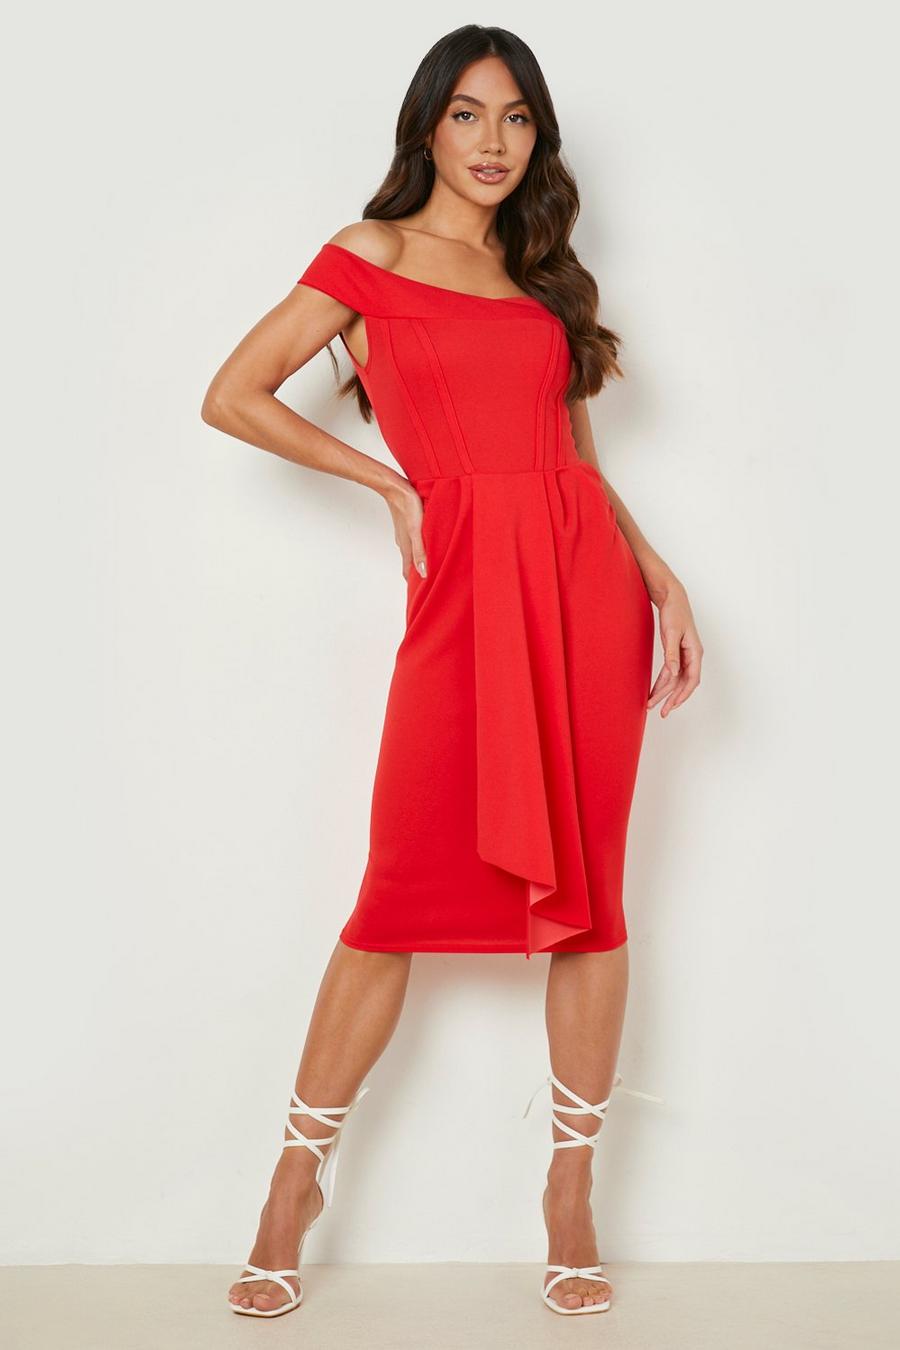 Red rosso שמלת מידי בסגנון ברדו עם מחוך ואפקט וילון